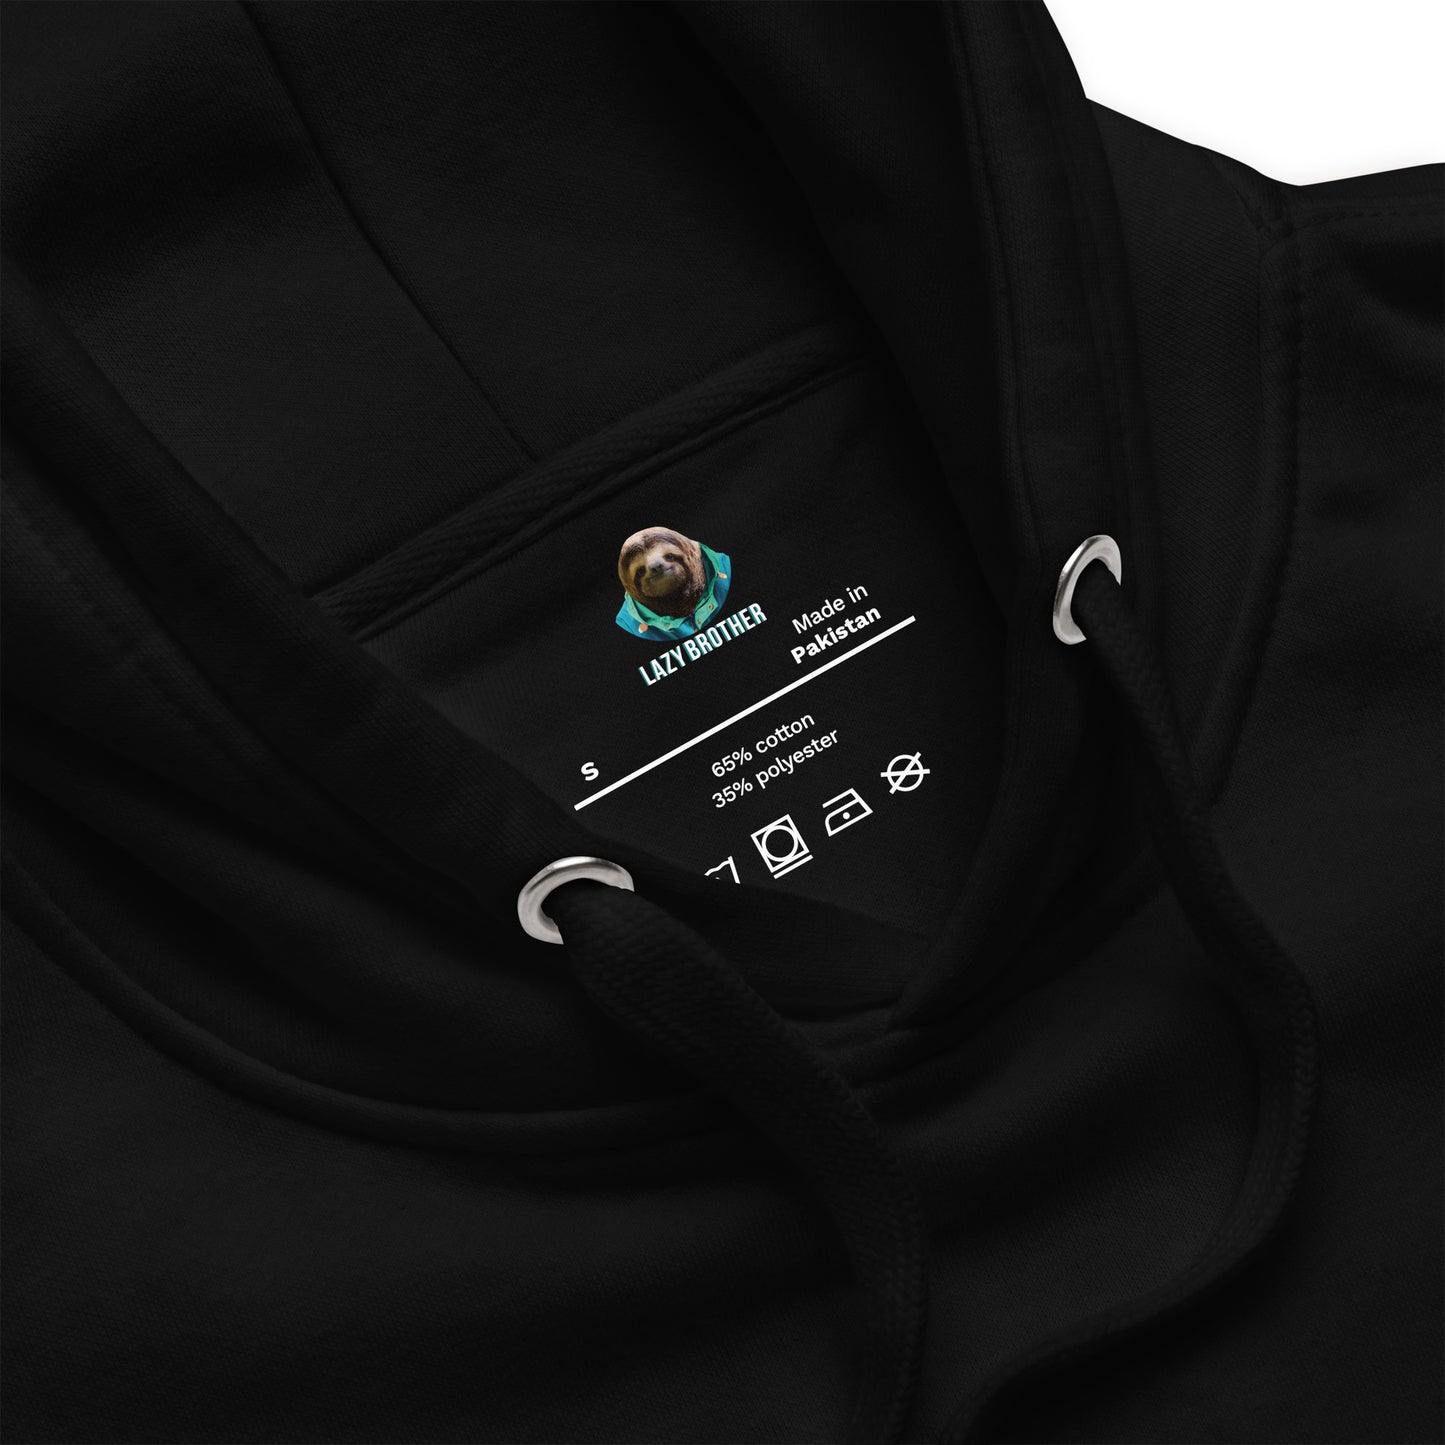 Embroidered Large Center, Printed Back Unisex Hoodie / Hooded Sweatshirt "Simulation"